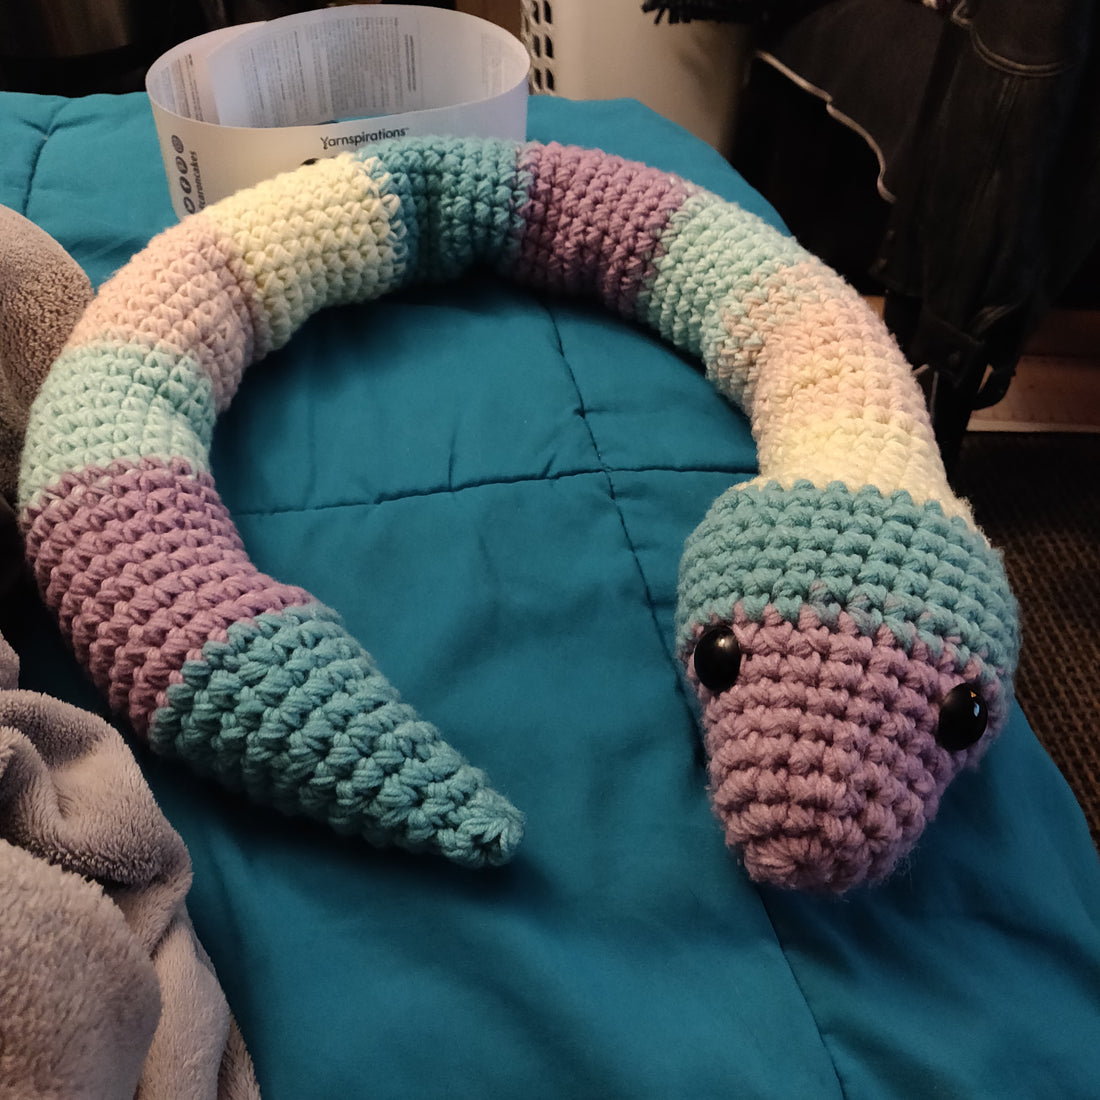 Snake Amigurumi free crochet pattern